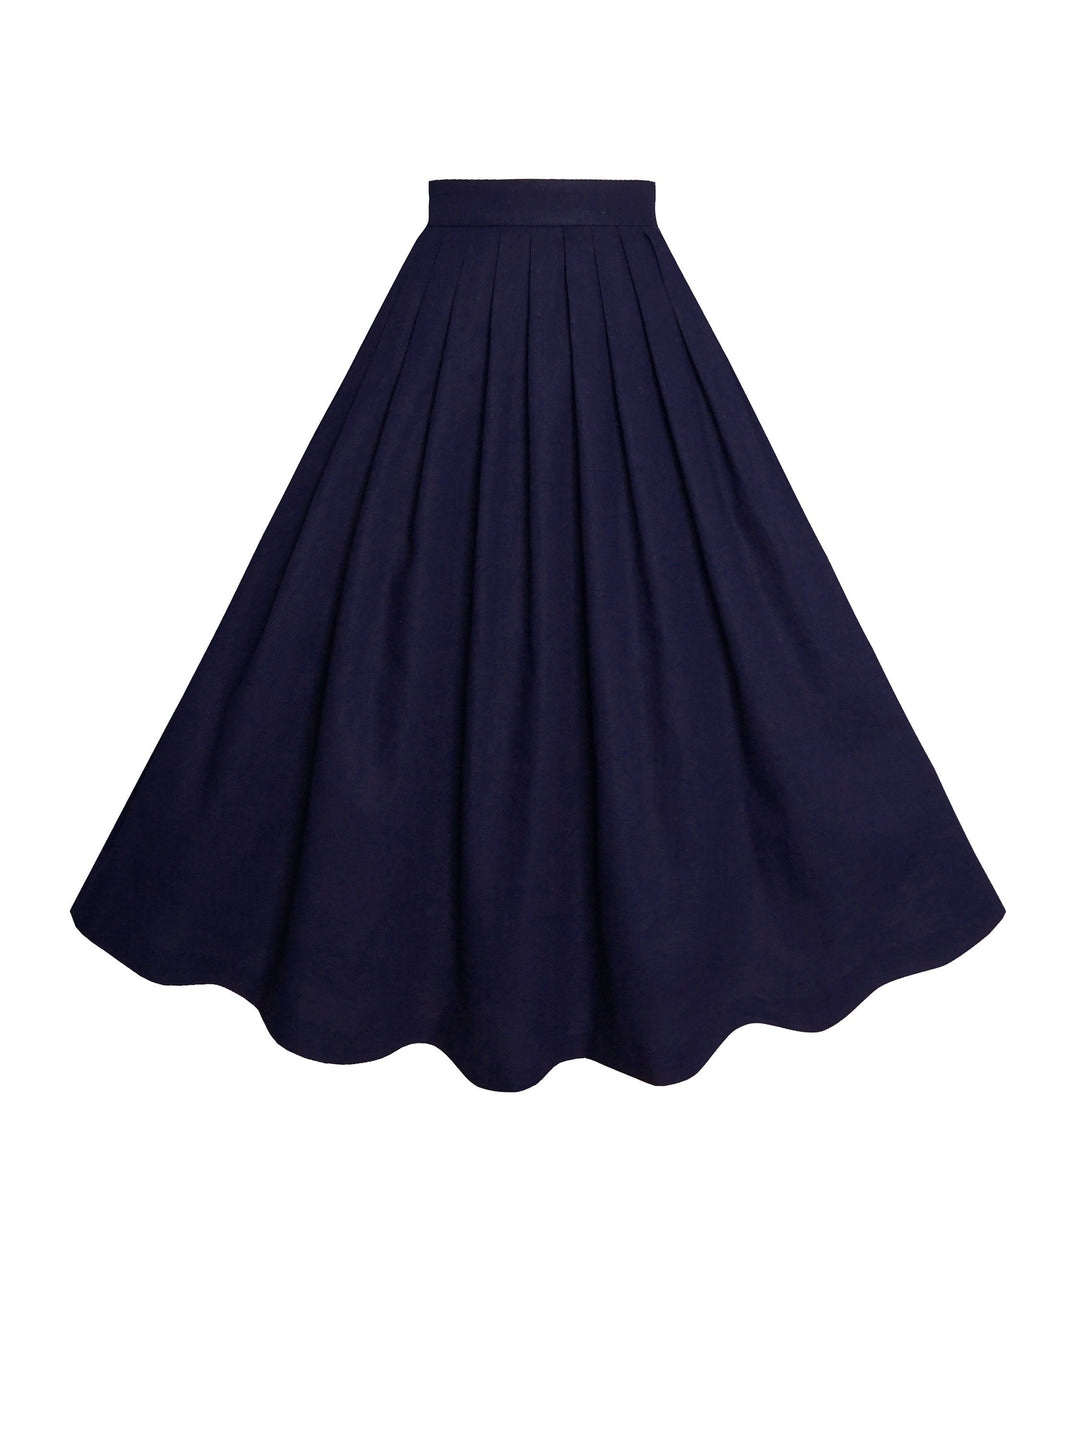 MTO - Ruby Skirt in Indigo Blue Linen